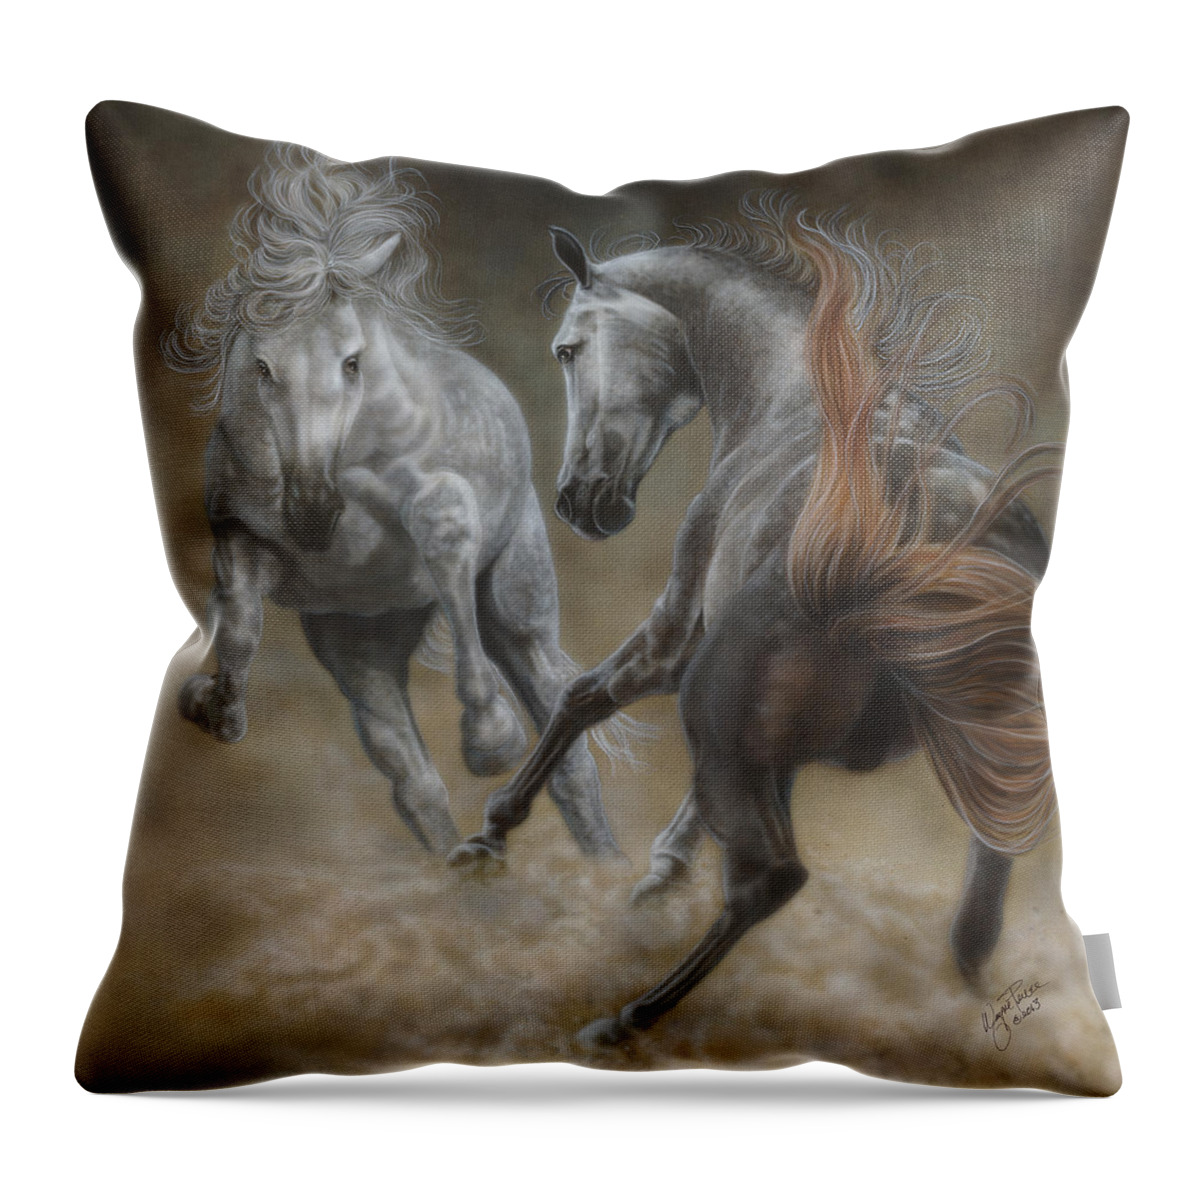 North Dakota Artist Throw Pillow featuring the painting Horseplay II by Wayne Pruse